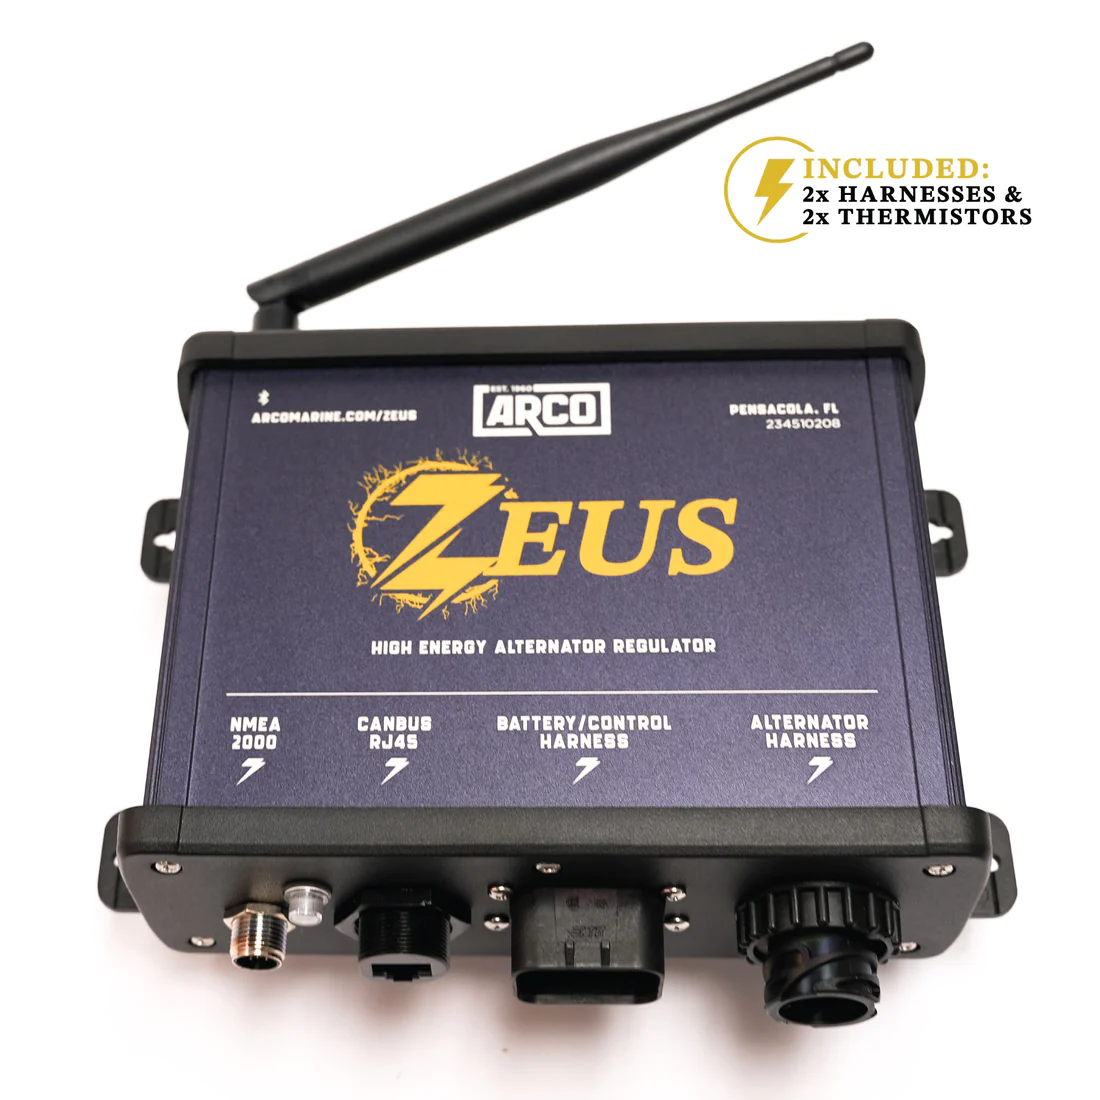 ARCO - Zeus generatorregulator inkl kablage och tempsensorer, BT, Wifi, N2K, 12-48V